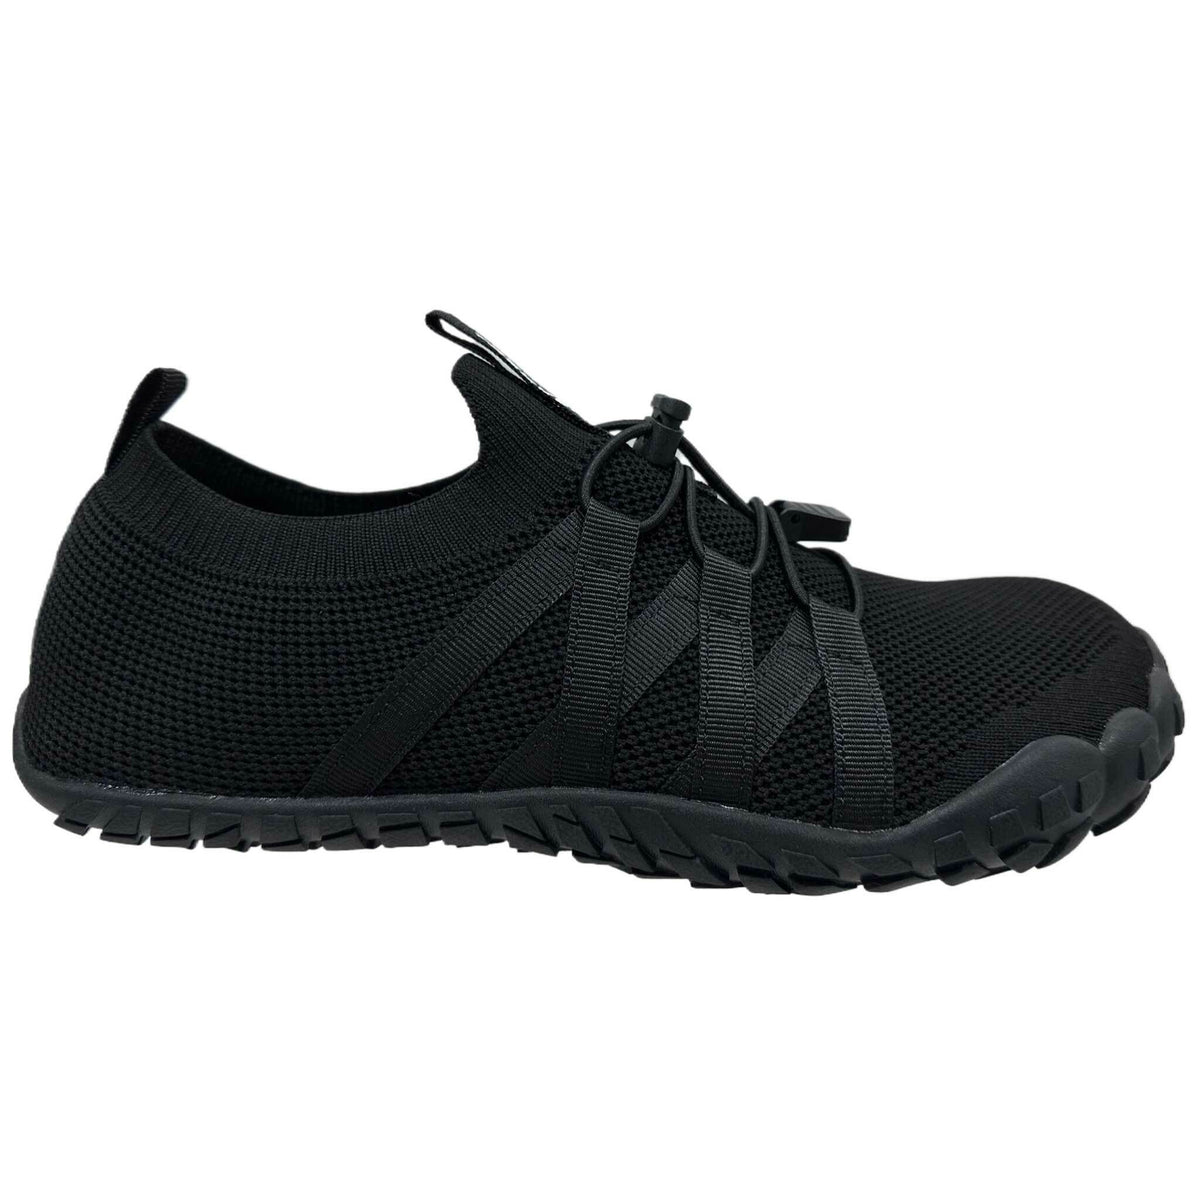 Trekker Barefoot Shoes Comfort, black - 79,90 EUR - Nordic ProStore